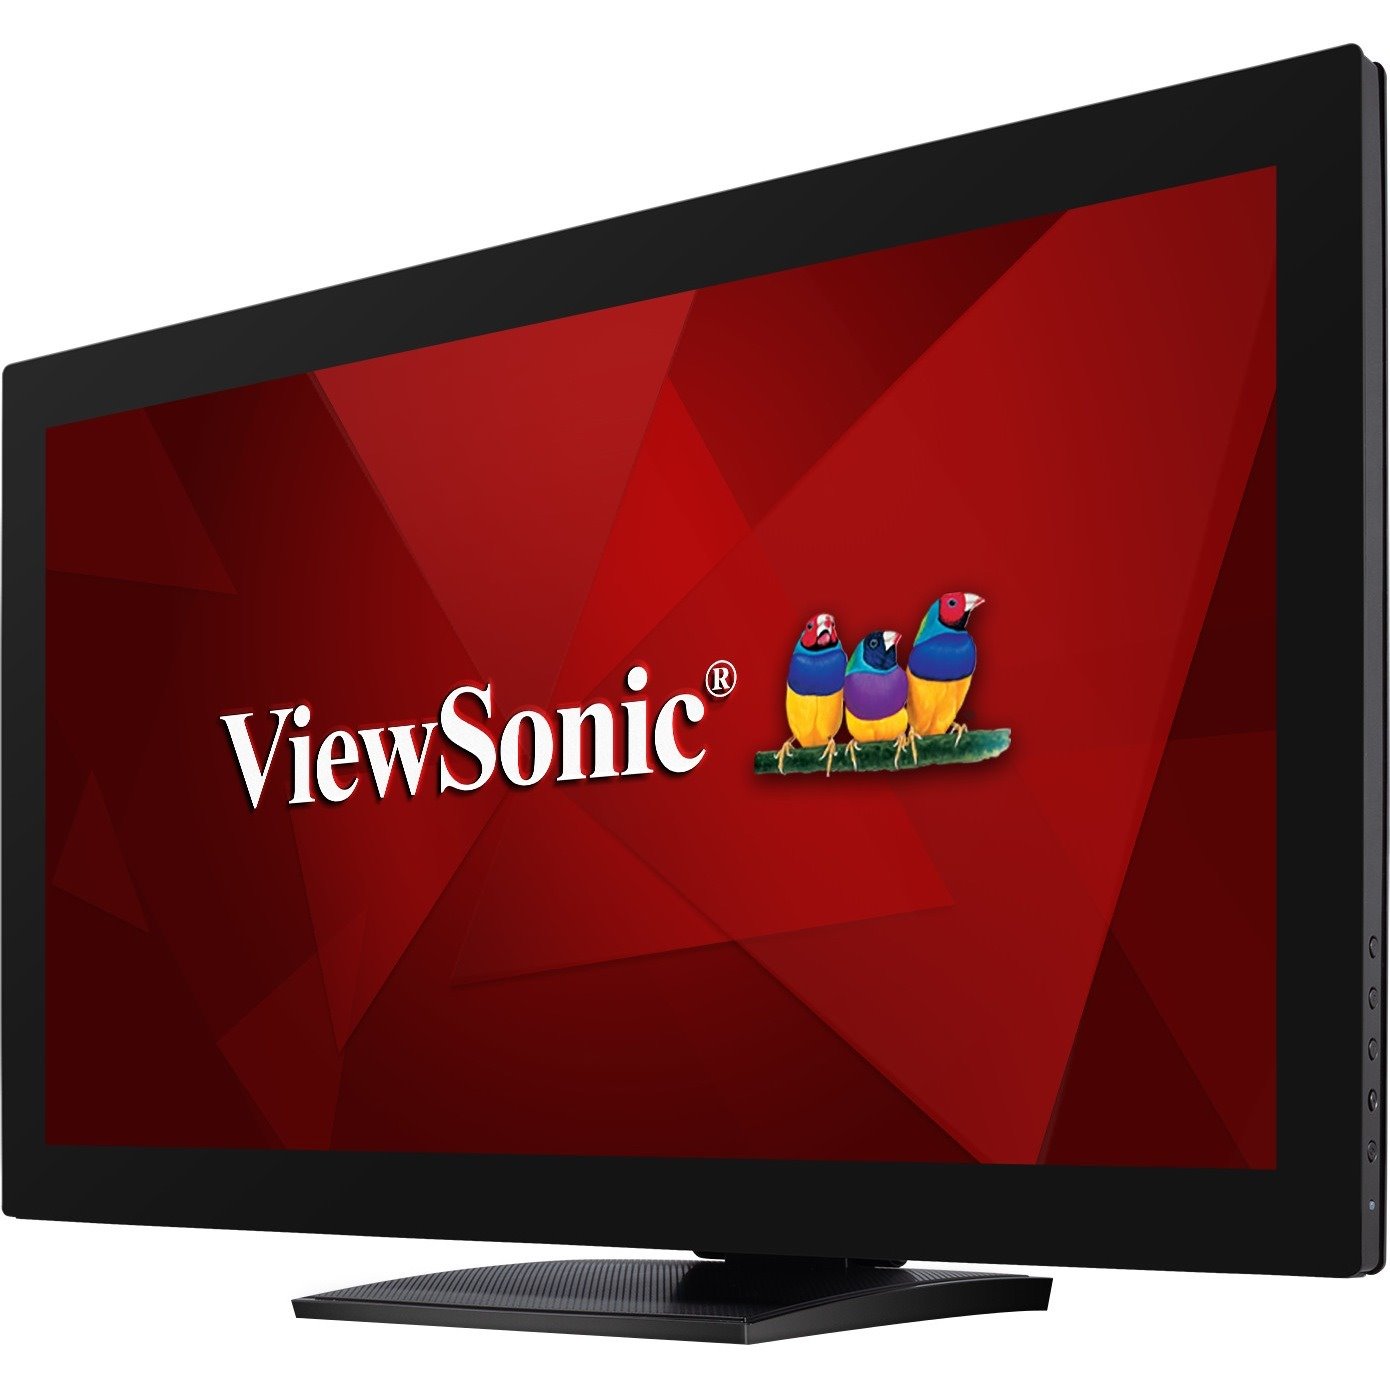 ViewSonic TD2760 27" Class LCD Touchscreen Monitor - 16:9 - 6 ms